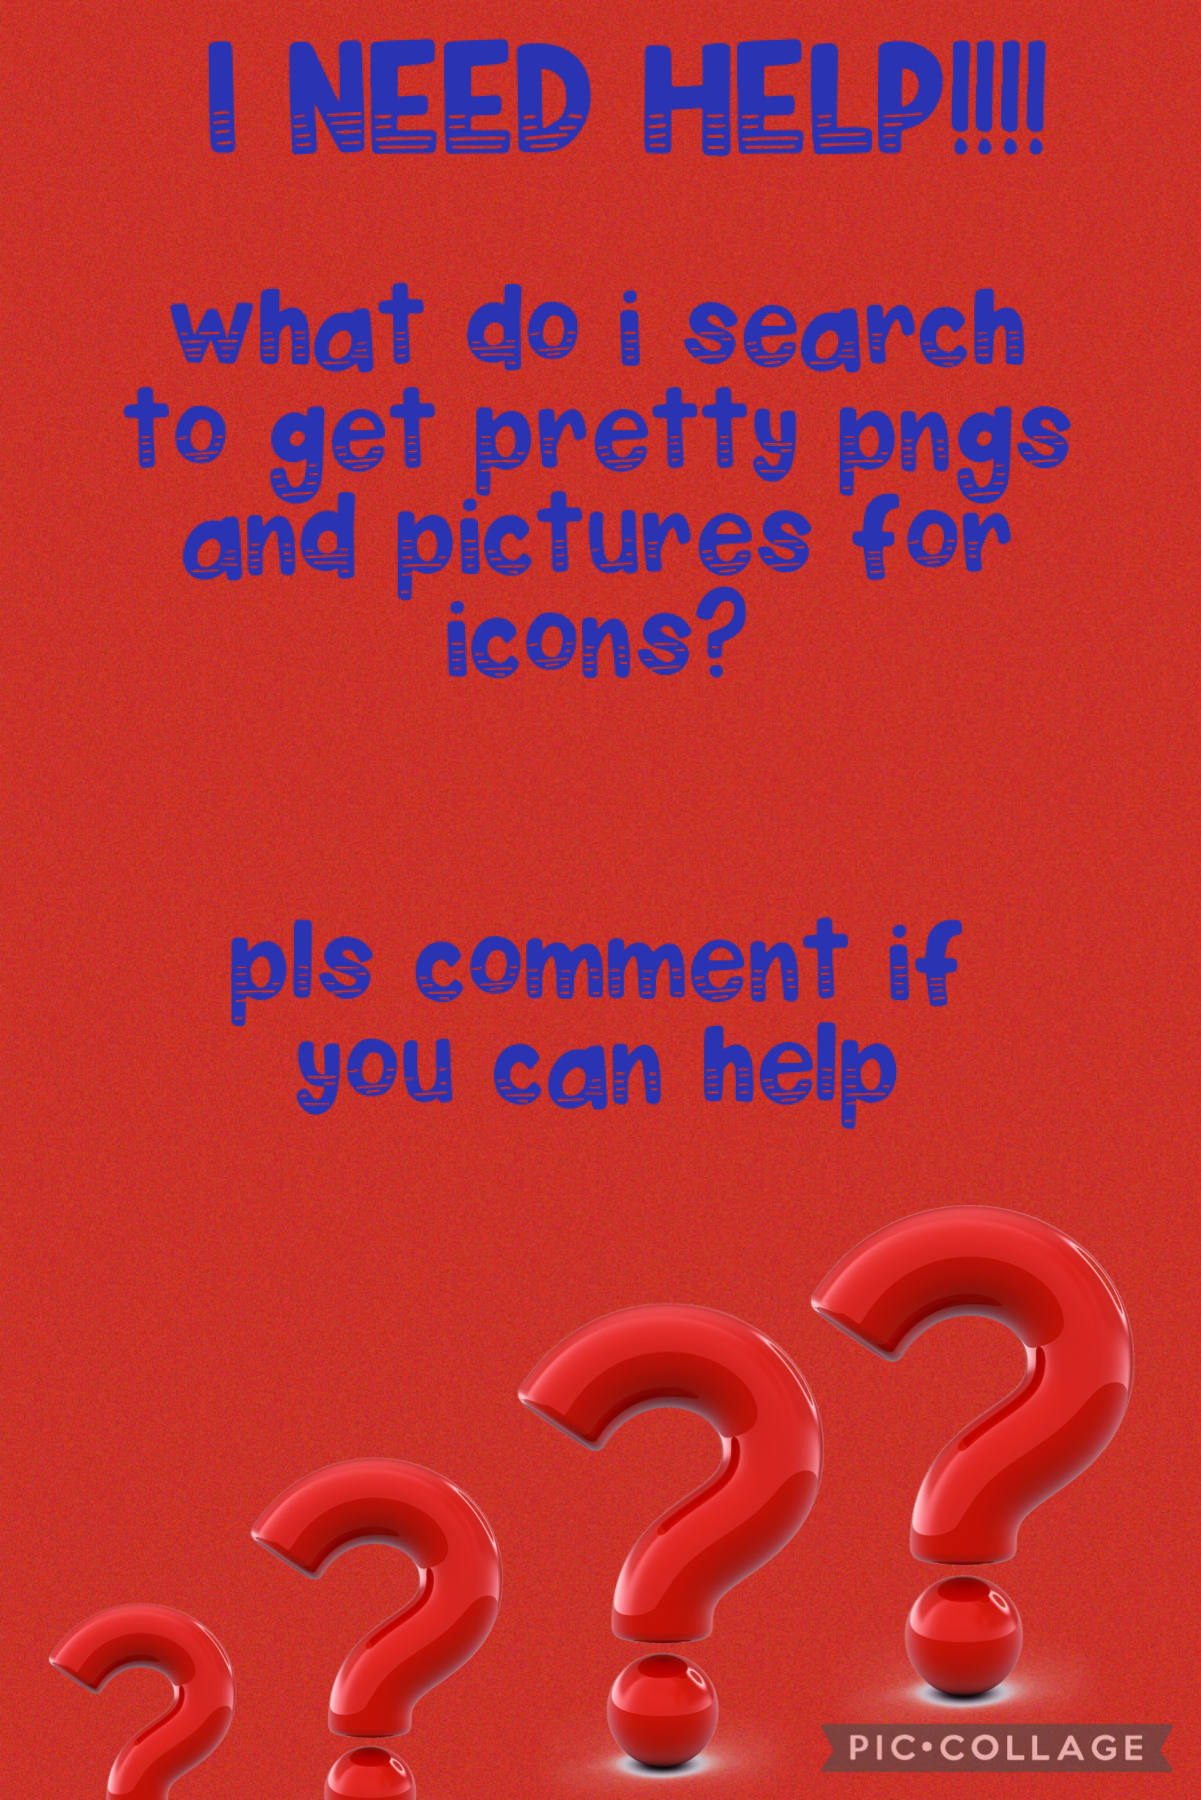 PLEASE HELP